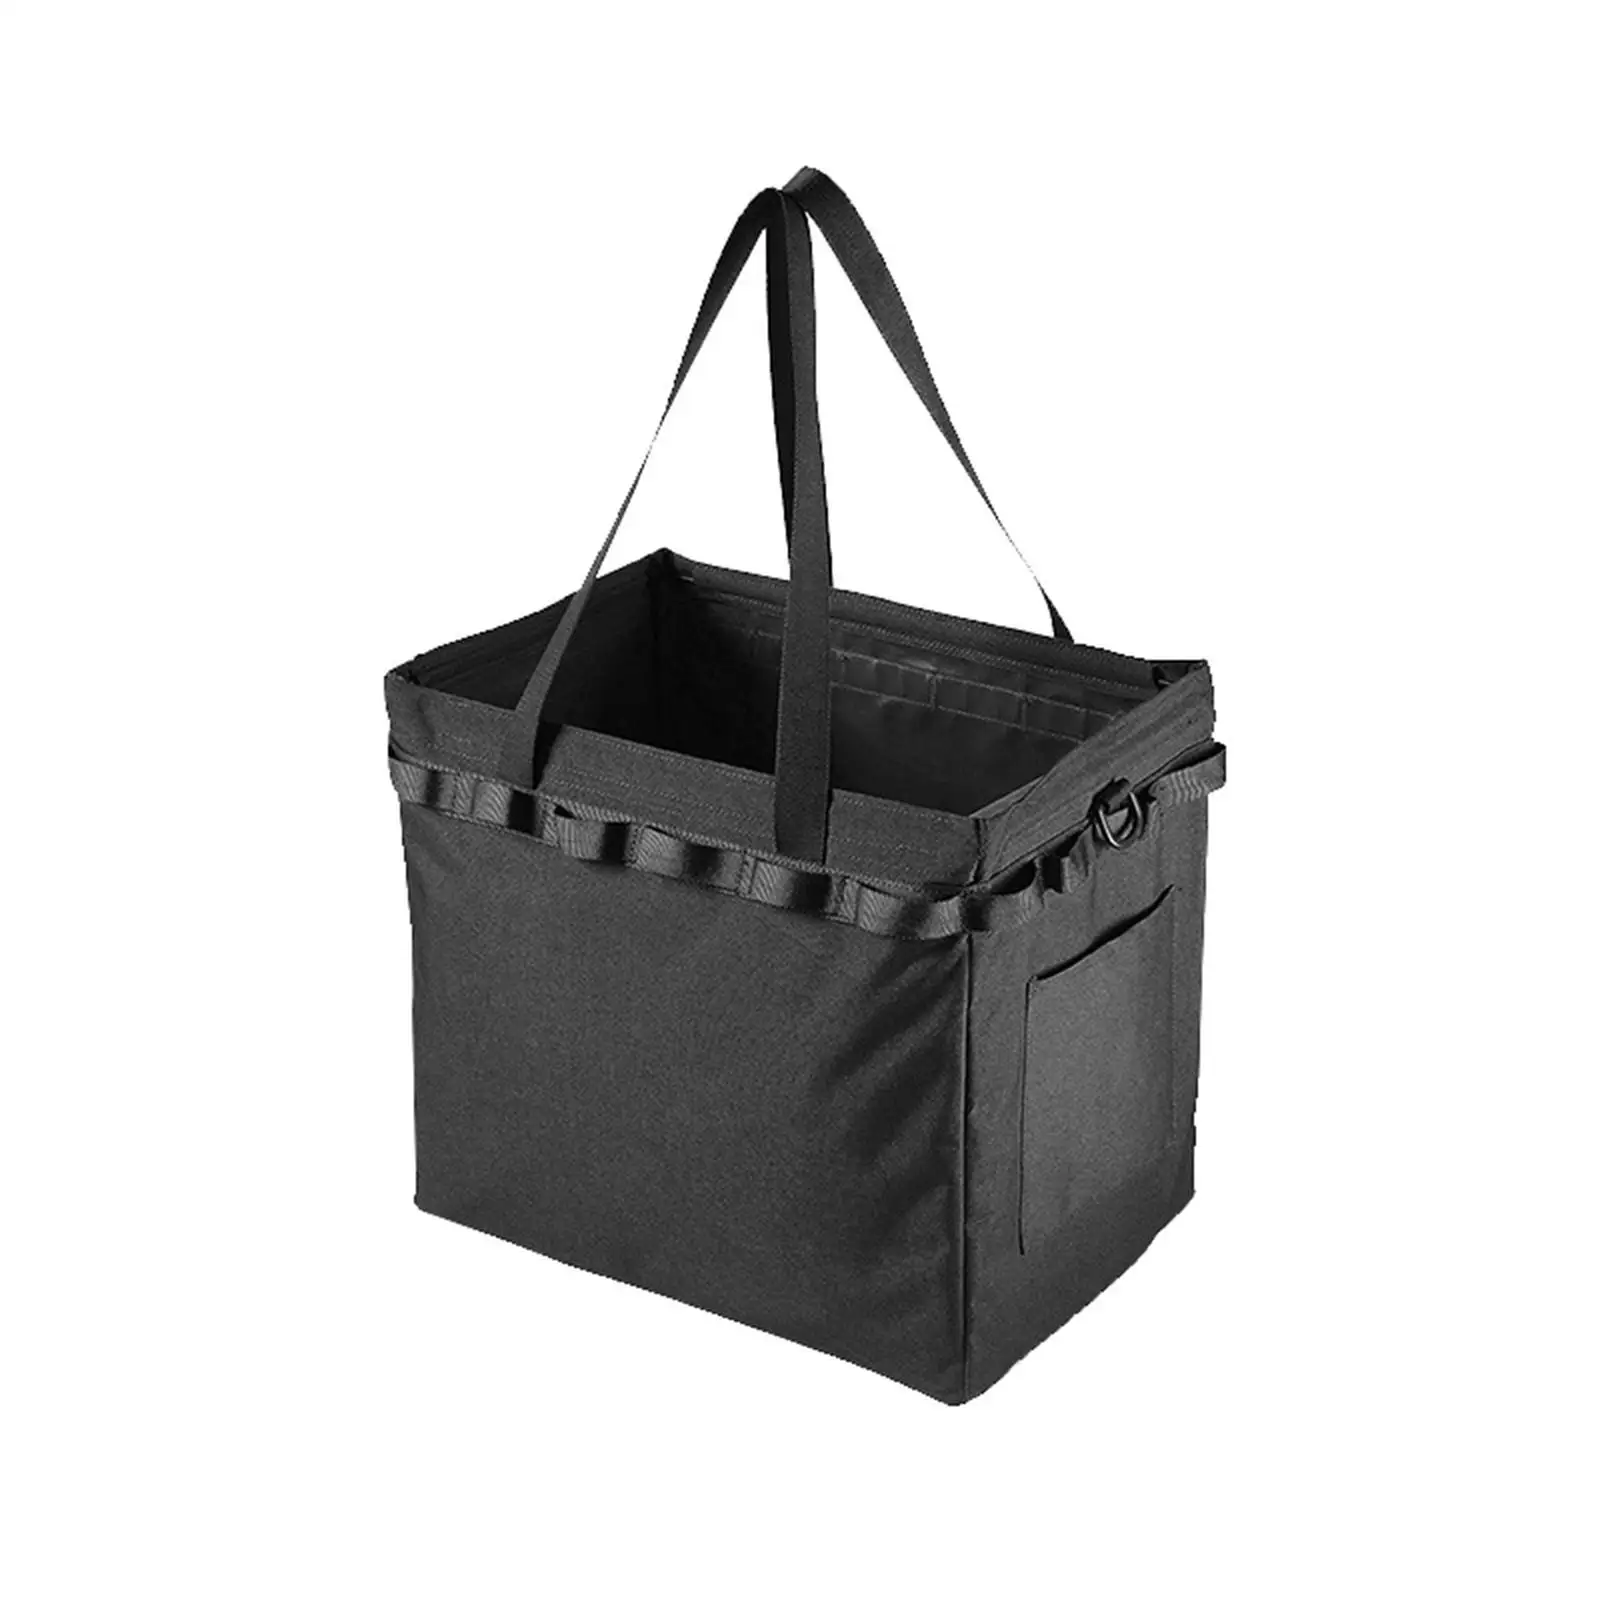 Outdoor Picnic Storage Bag Handbag Utility Carry Bag Large Capacity Black 36.5x24.5x32.5cm Convenient for Family Hiking Portable